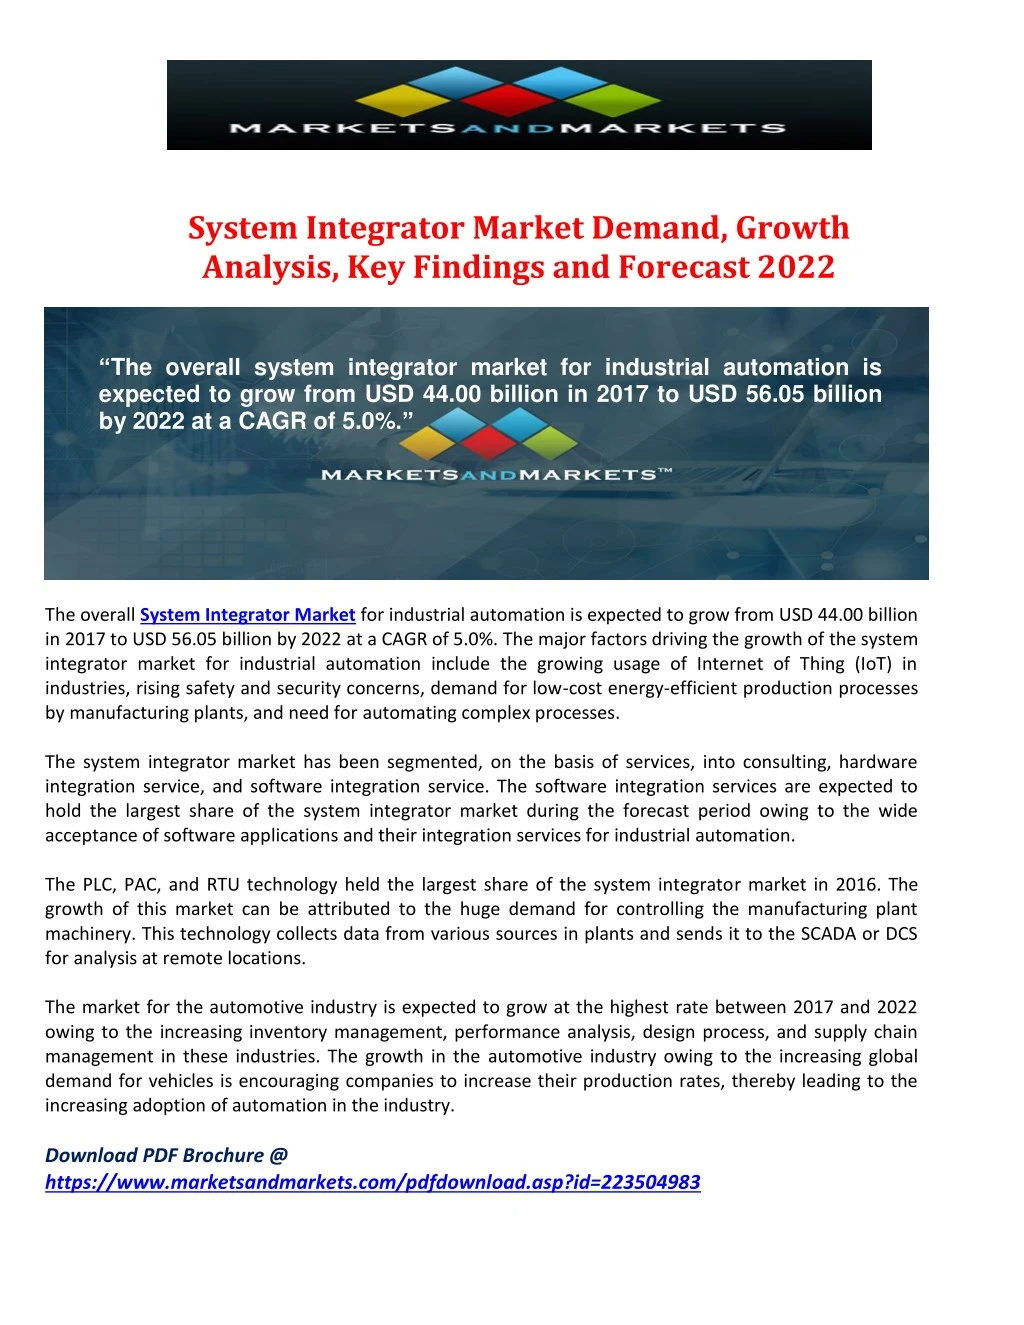 system integrator market demand growth analysis